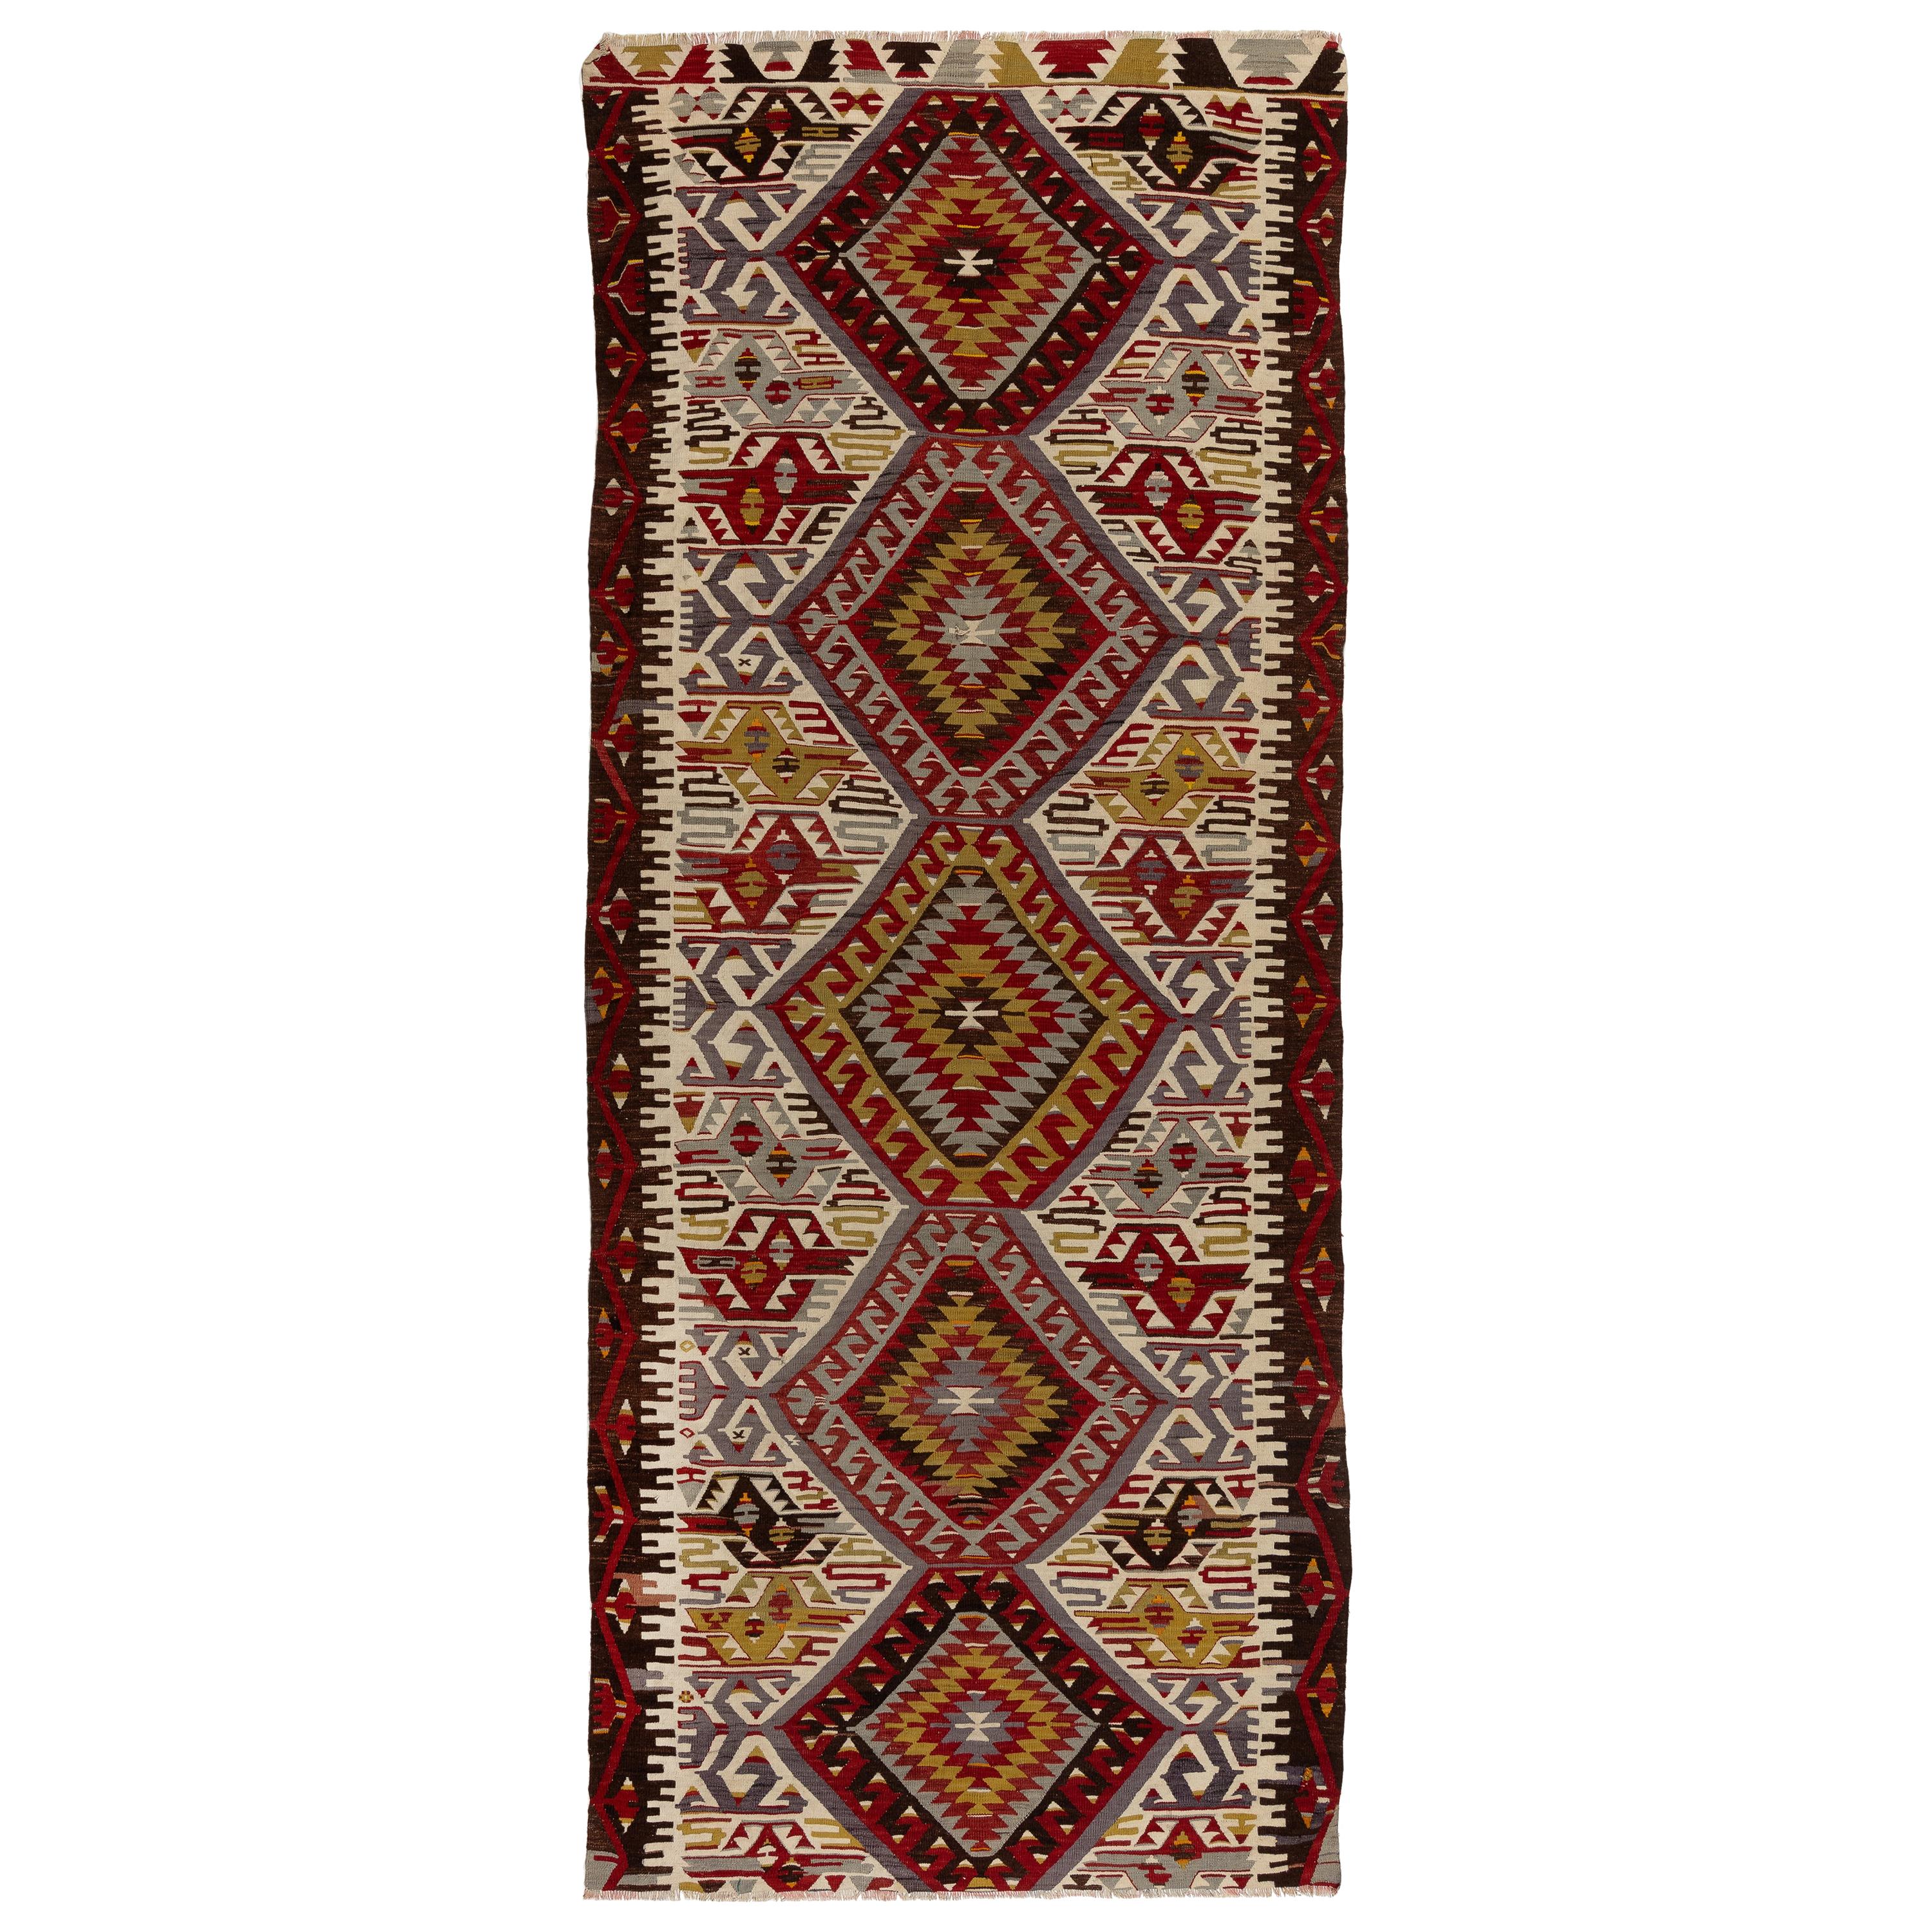 Antique Turkish Runner Kilim with Geometric Design. 4.8x11 Ft Wool Flatweave Rug